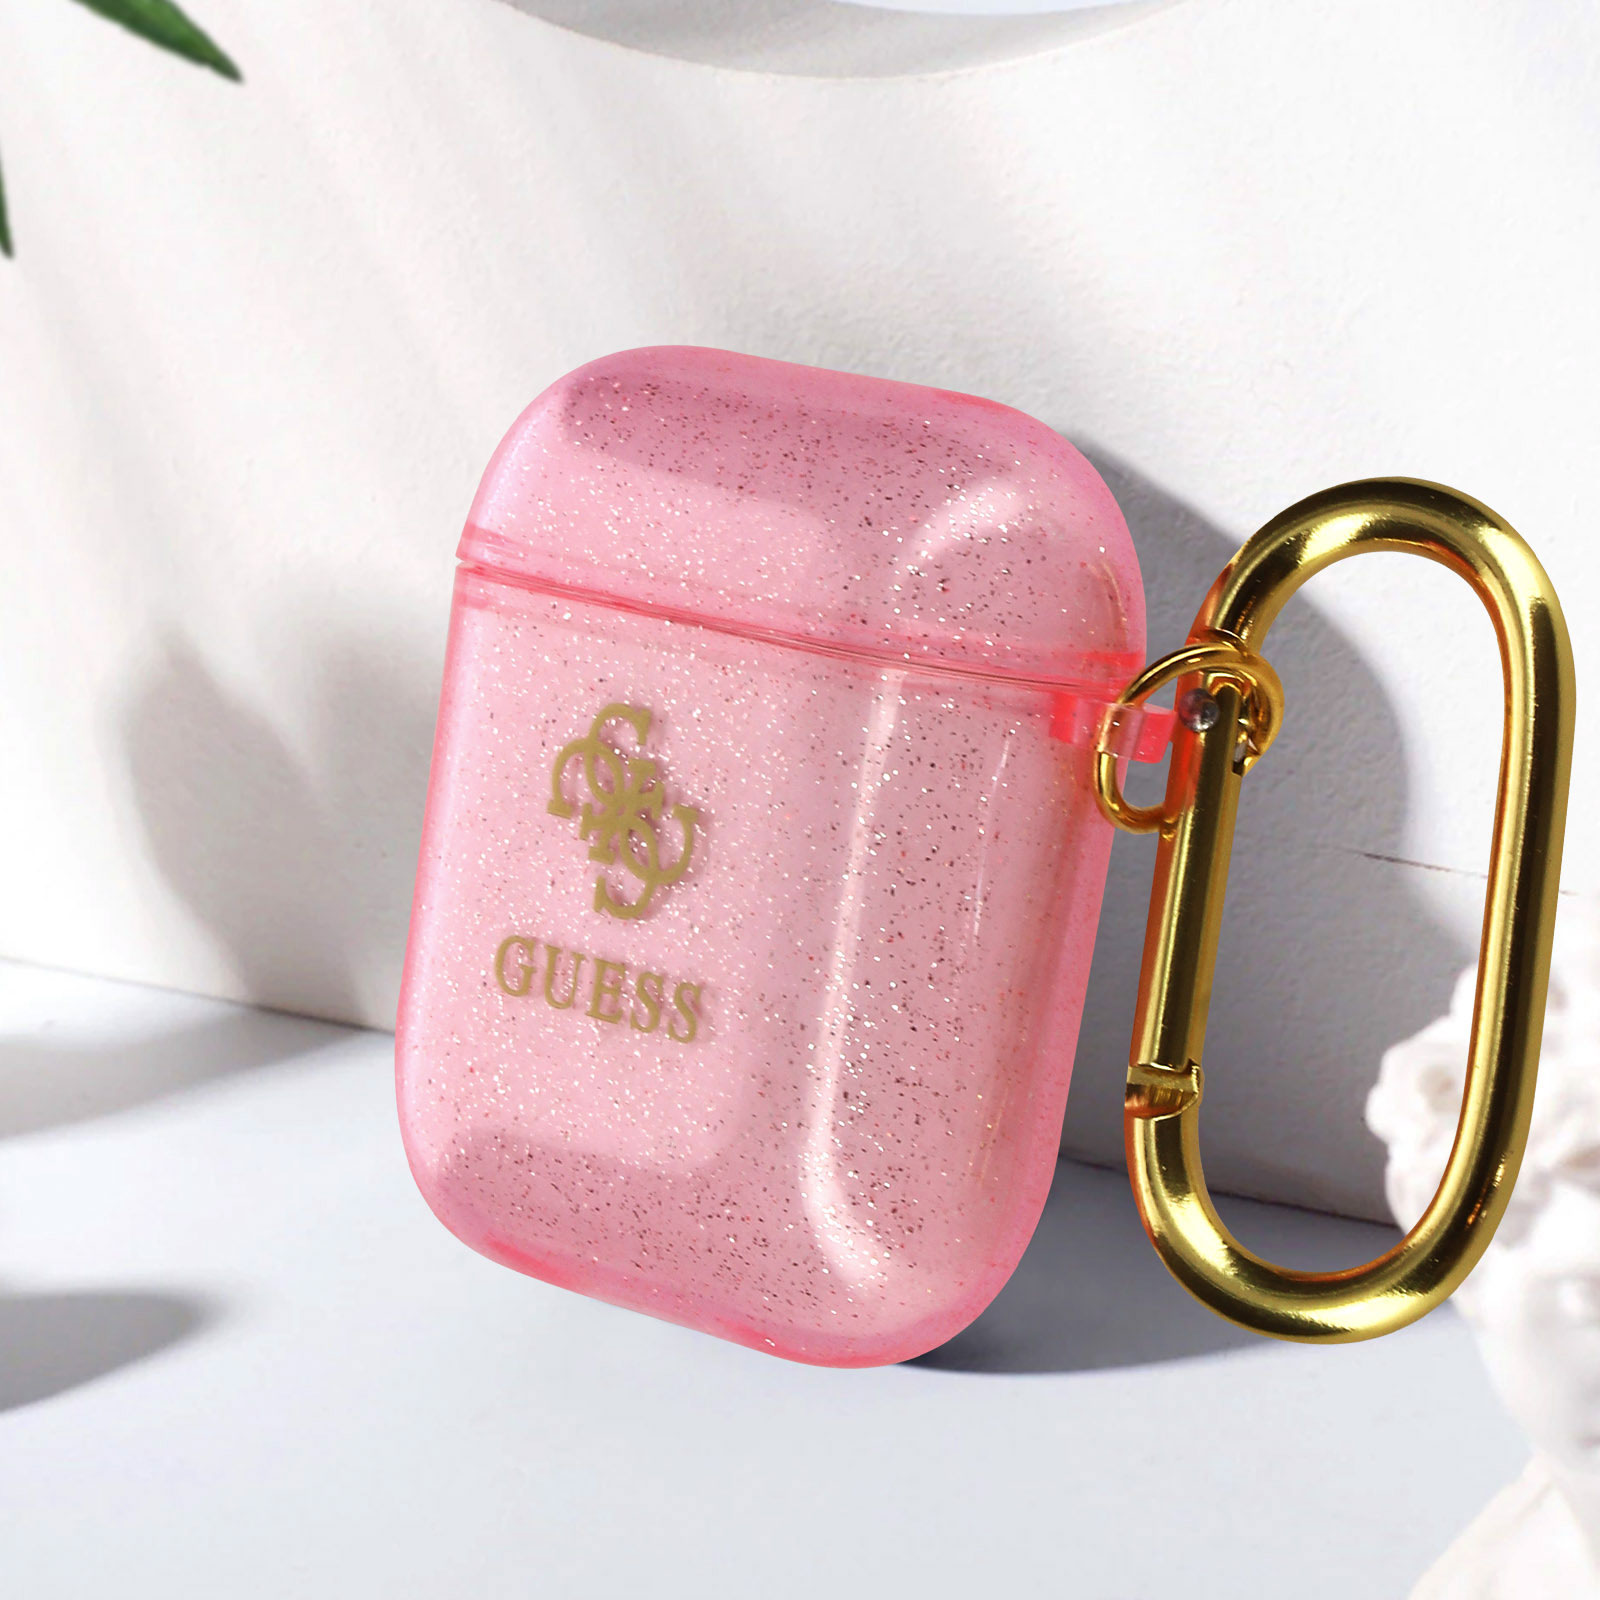 GUESS Glitter Rosa Karabinerhaken, AirPods, Apple, Full und Cover